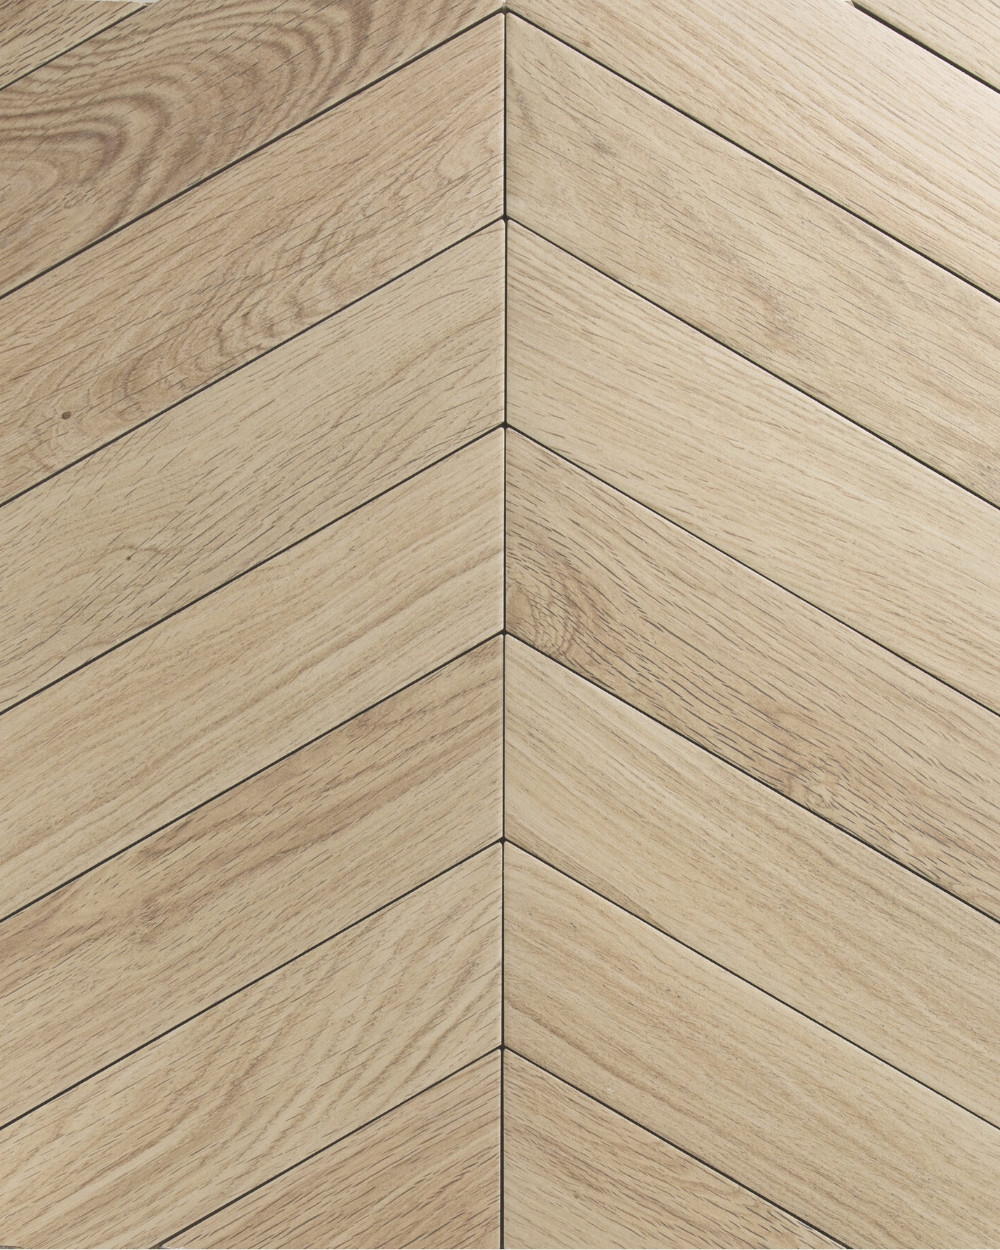 Beautiful chevron tiles in wood look 8.5x44 cm | Oregon Nogal | Sample shipping